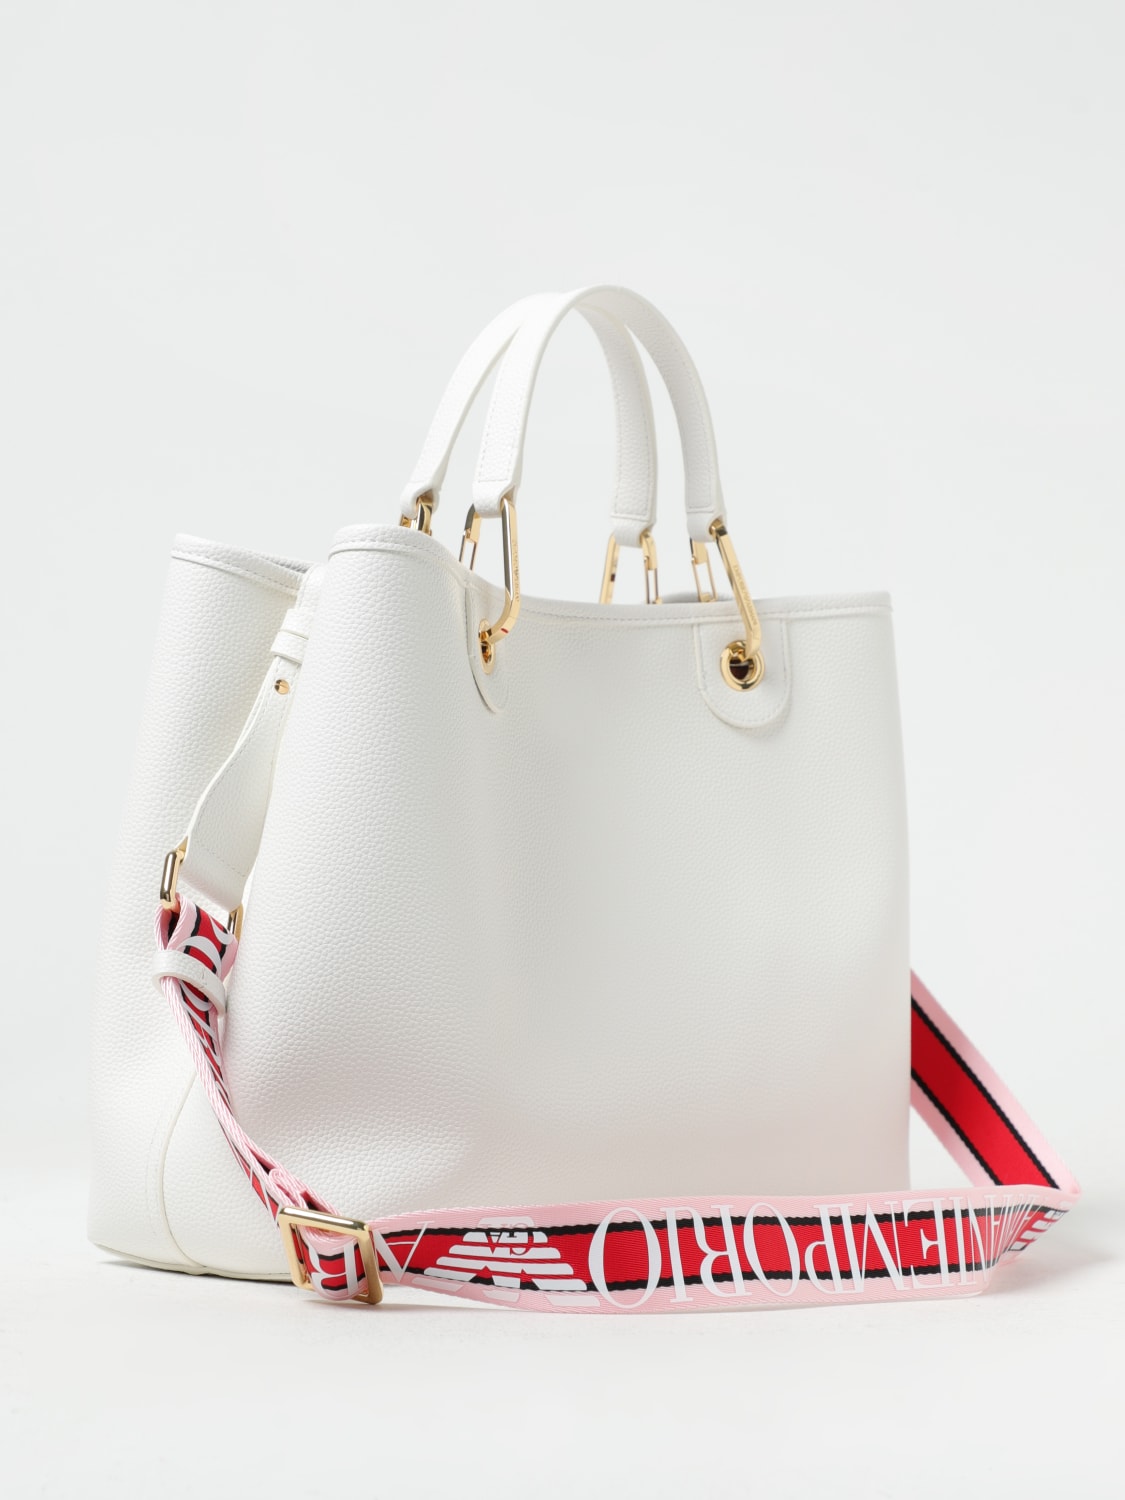 EMPORIO ARMANI: bag in grained synthetic leather - White | Emporio ...